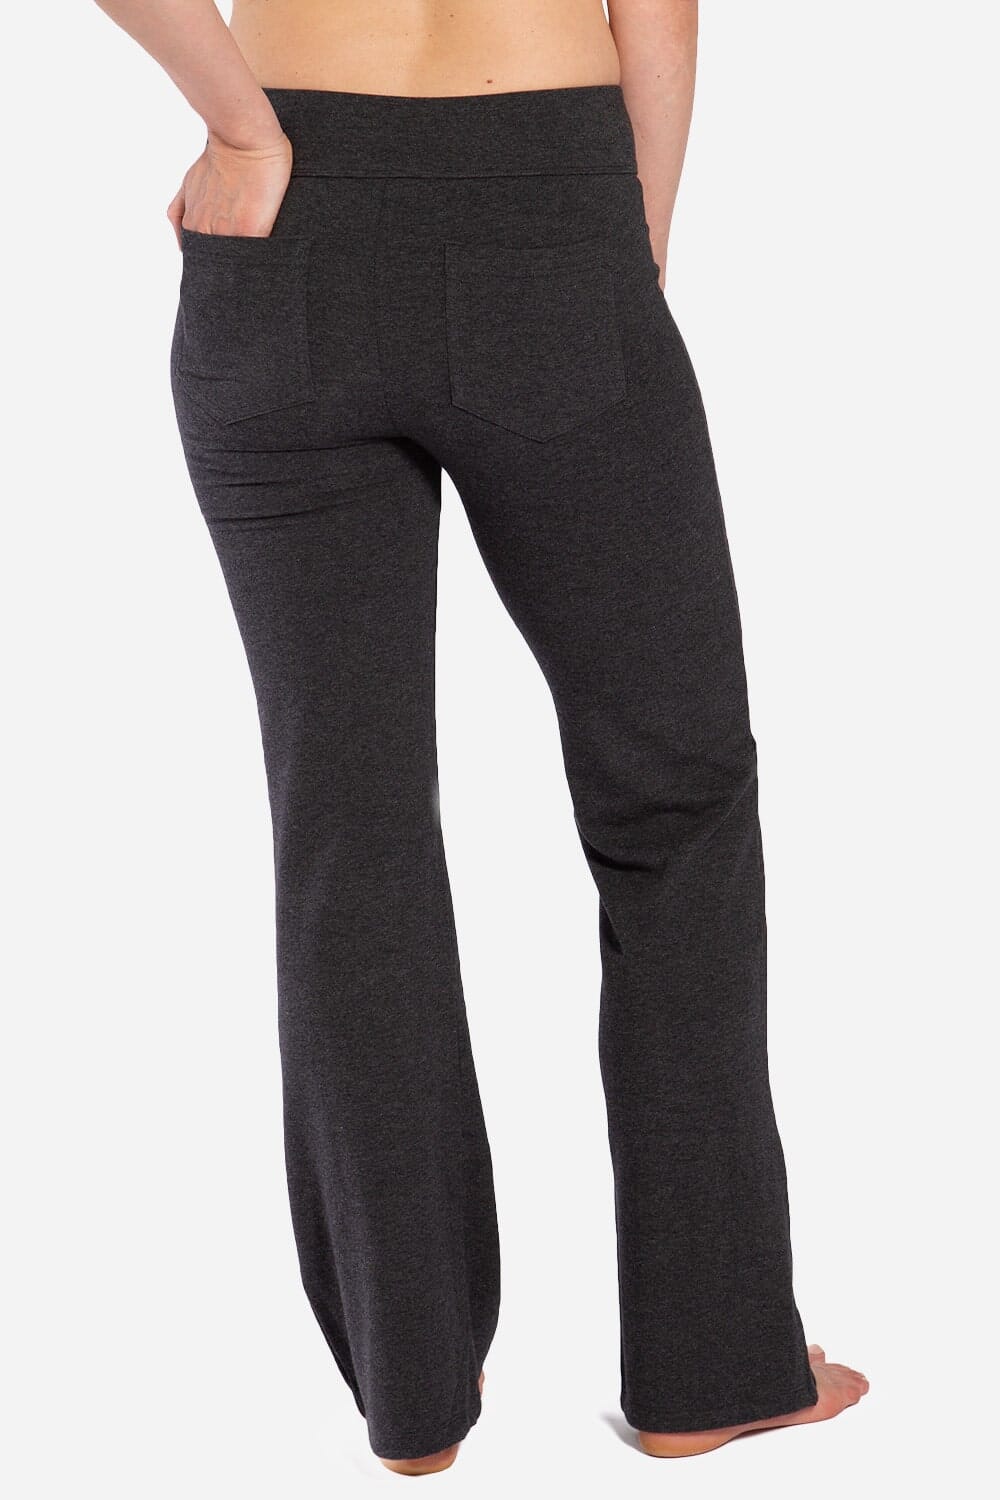 Shasmi Peach Lightweight Stretchable Yoga Pants Boot-Cut Regular